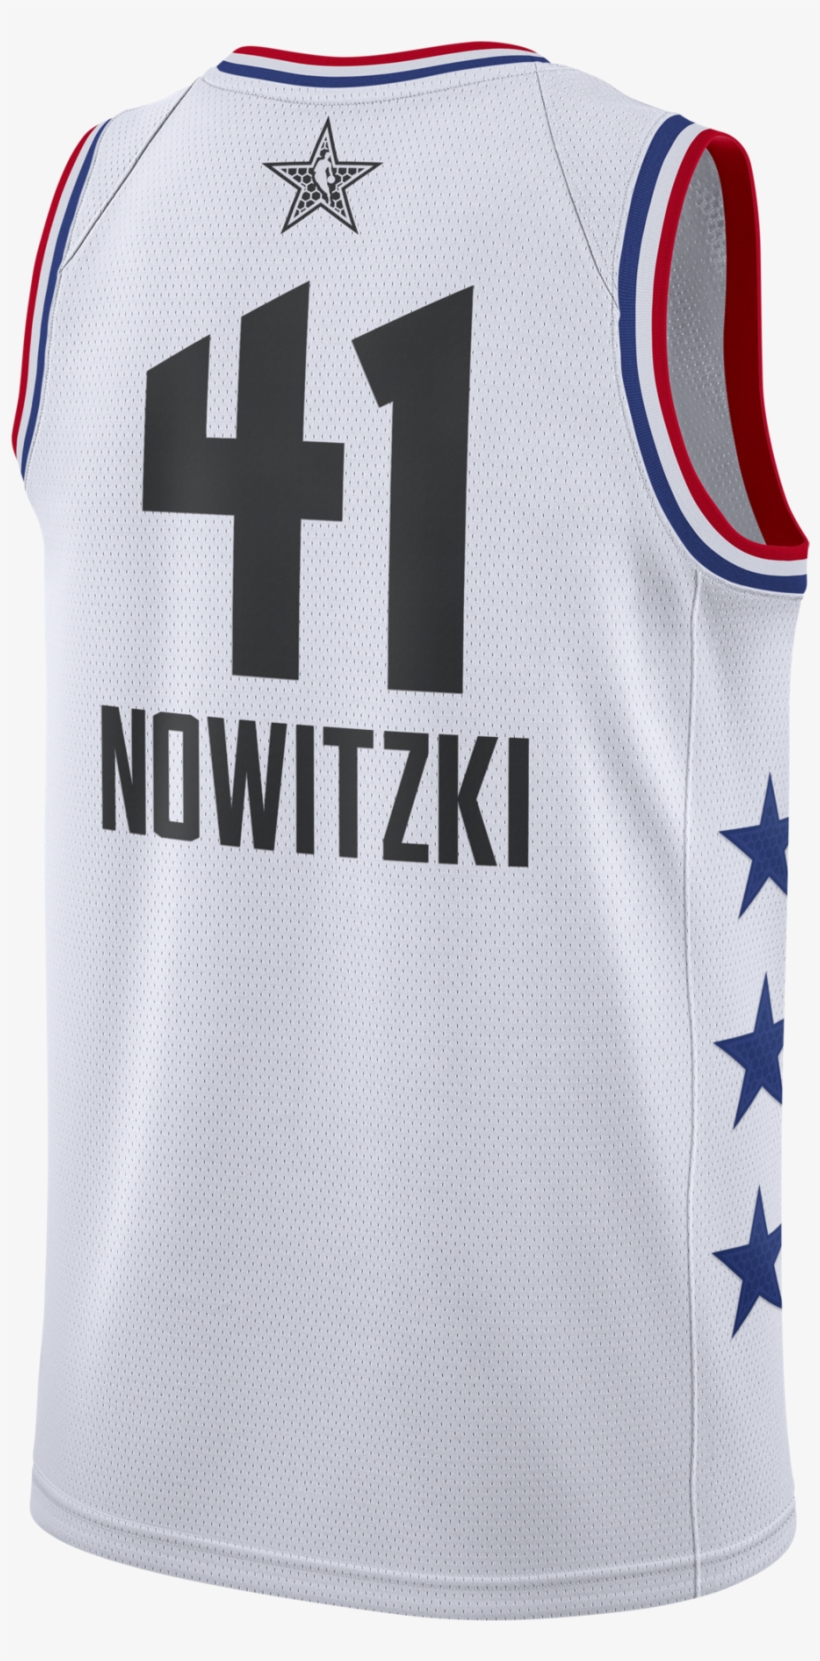 Dallas Mavericks 2019 Dirk Nowitzki All-star Edition - Active Tank, transparent png #7837014